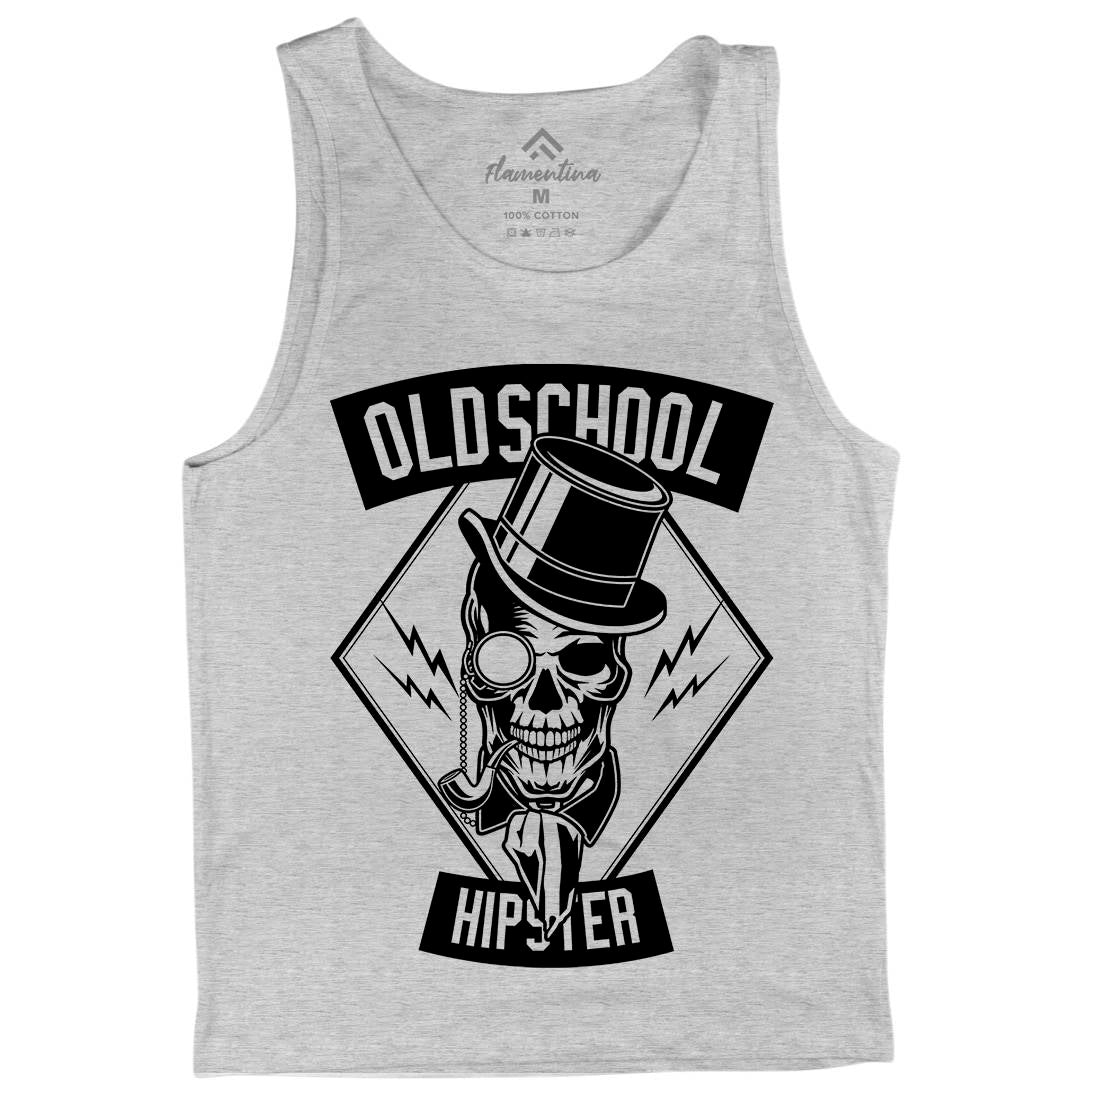 Old School Hipster Mens Tank Top Vest Retro B592